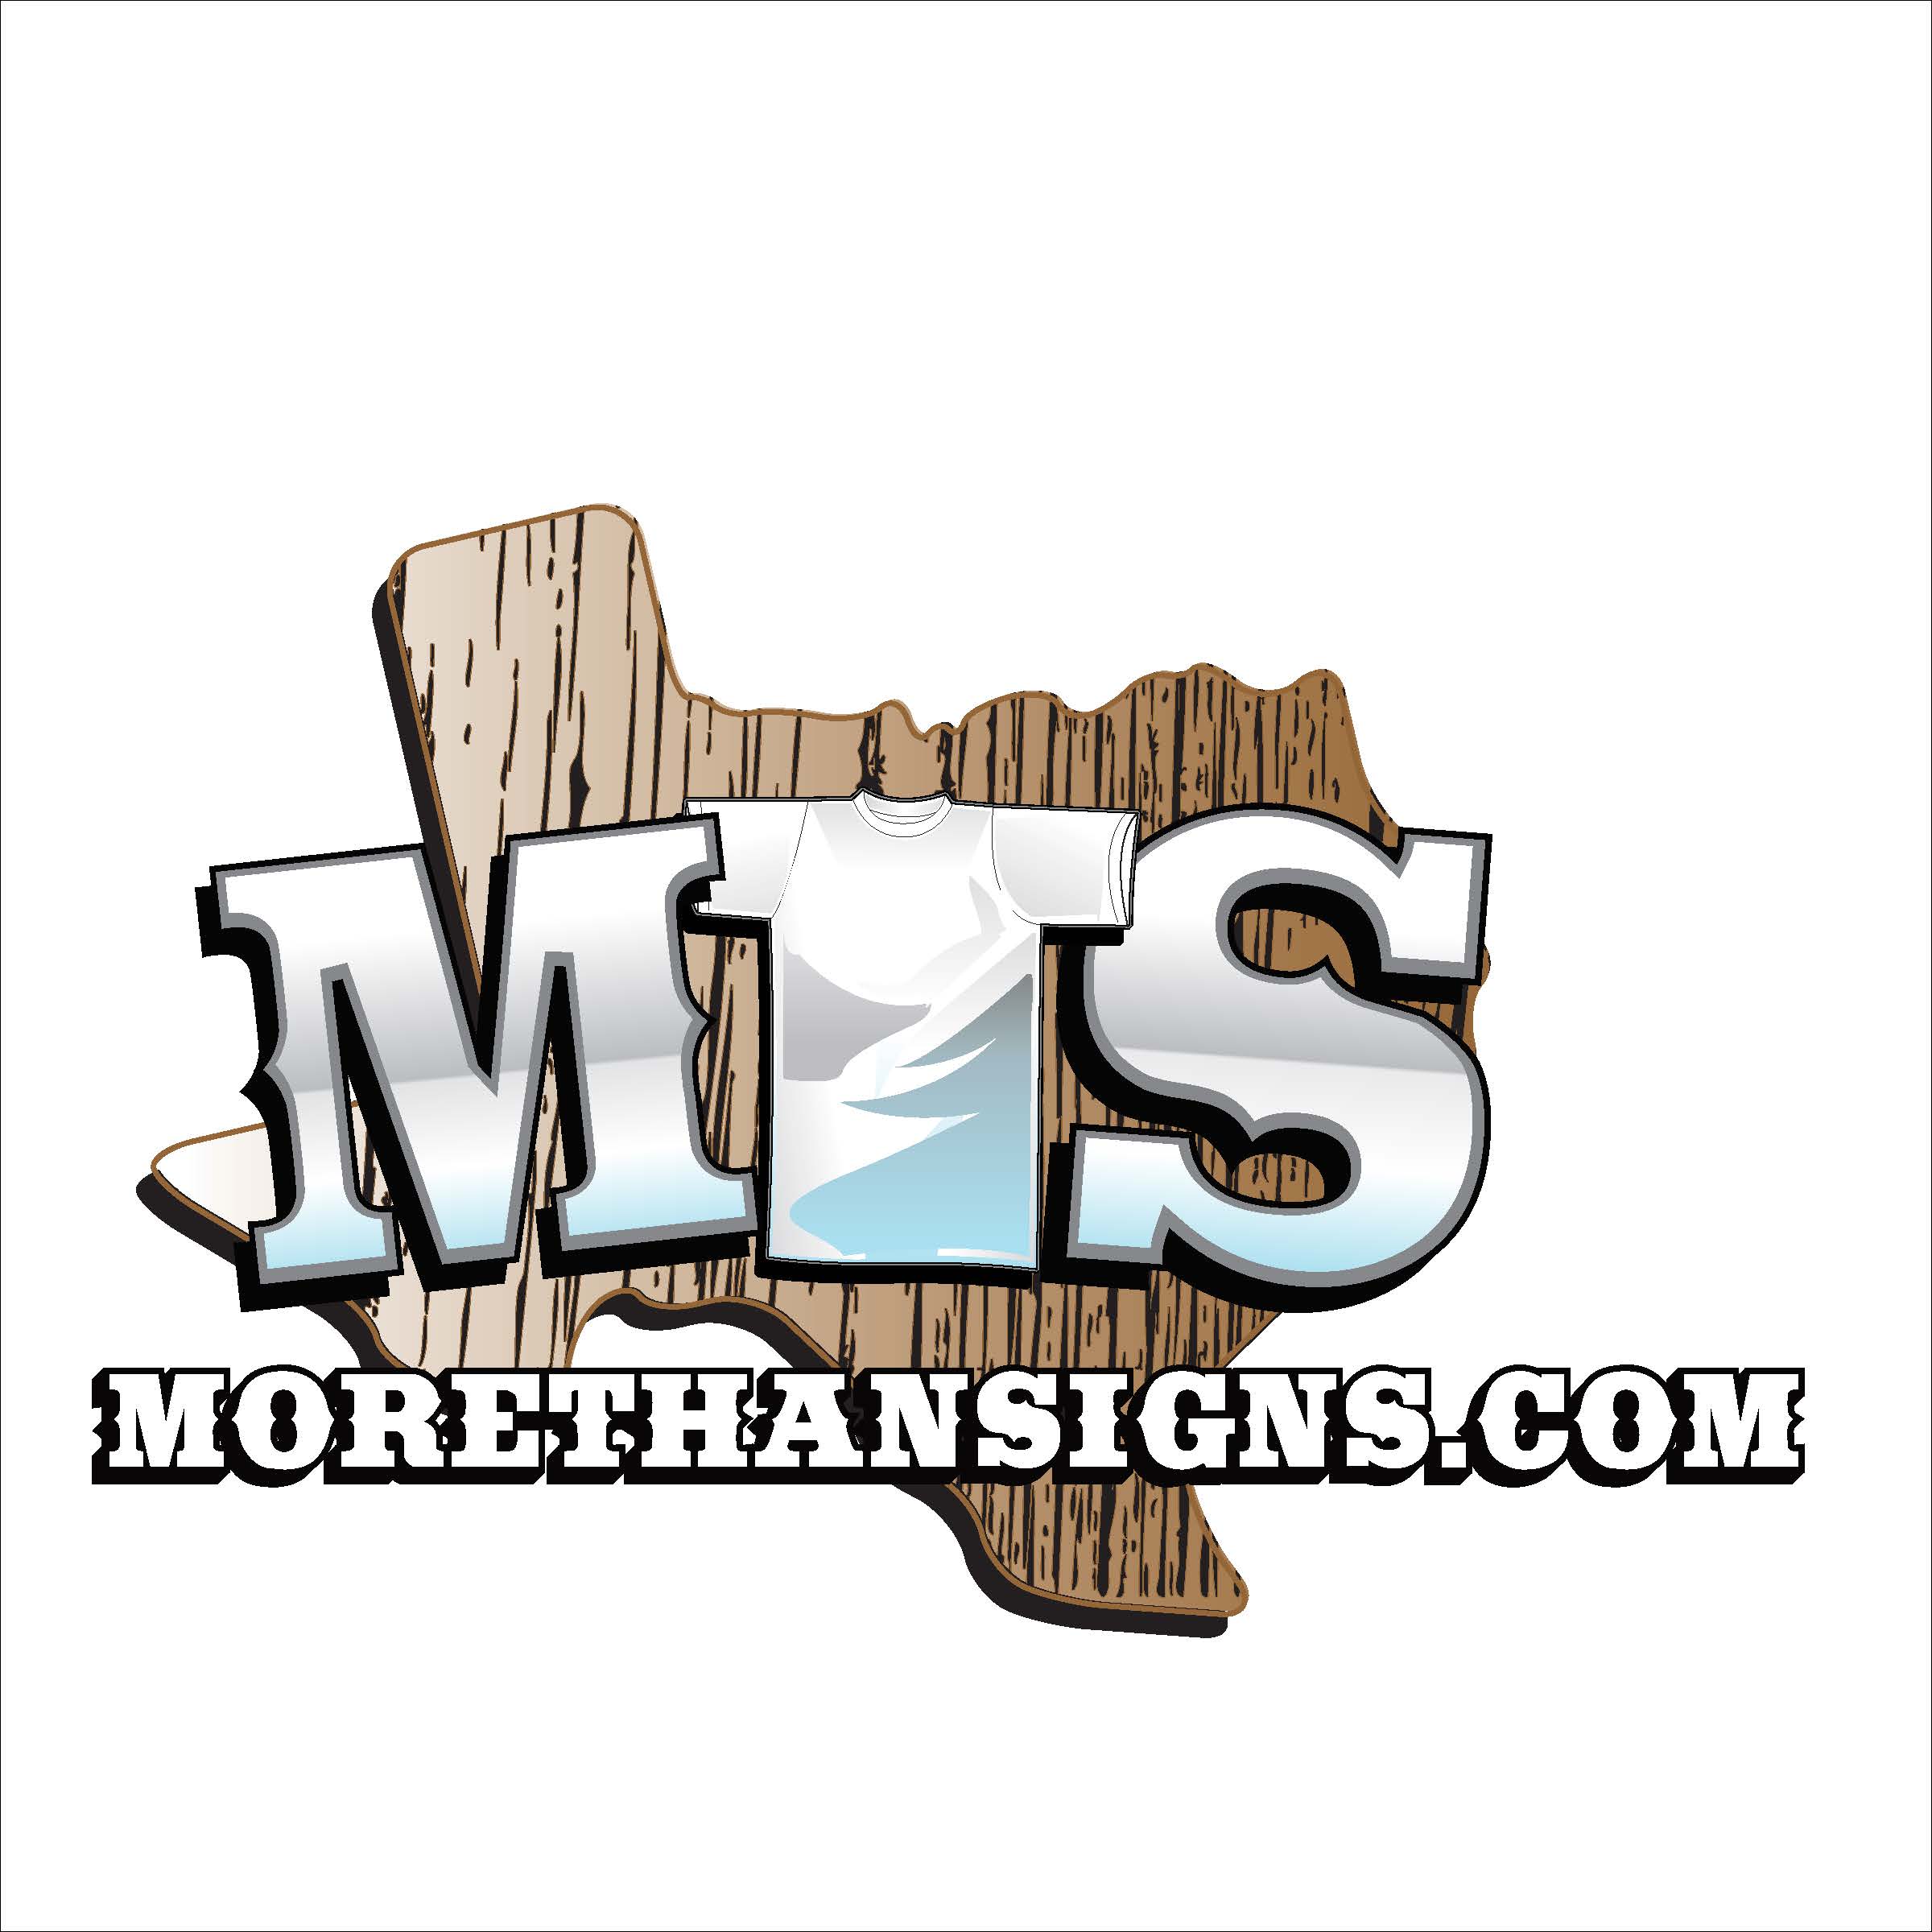 mts More than Signs logo.jpg